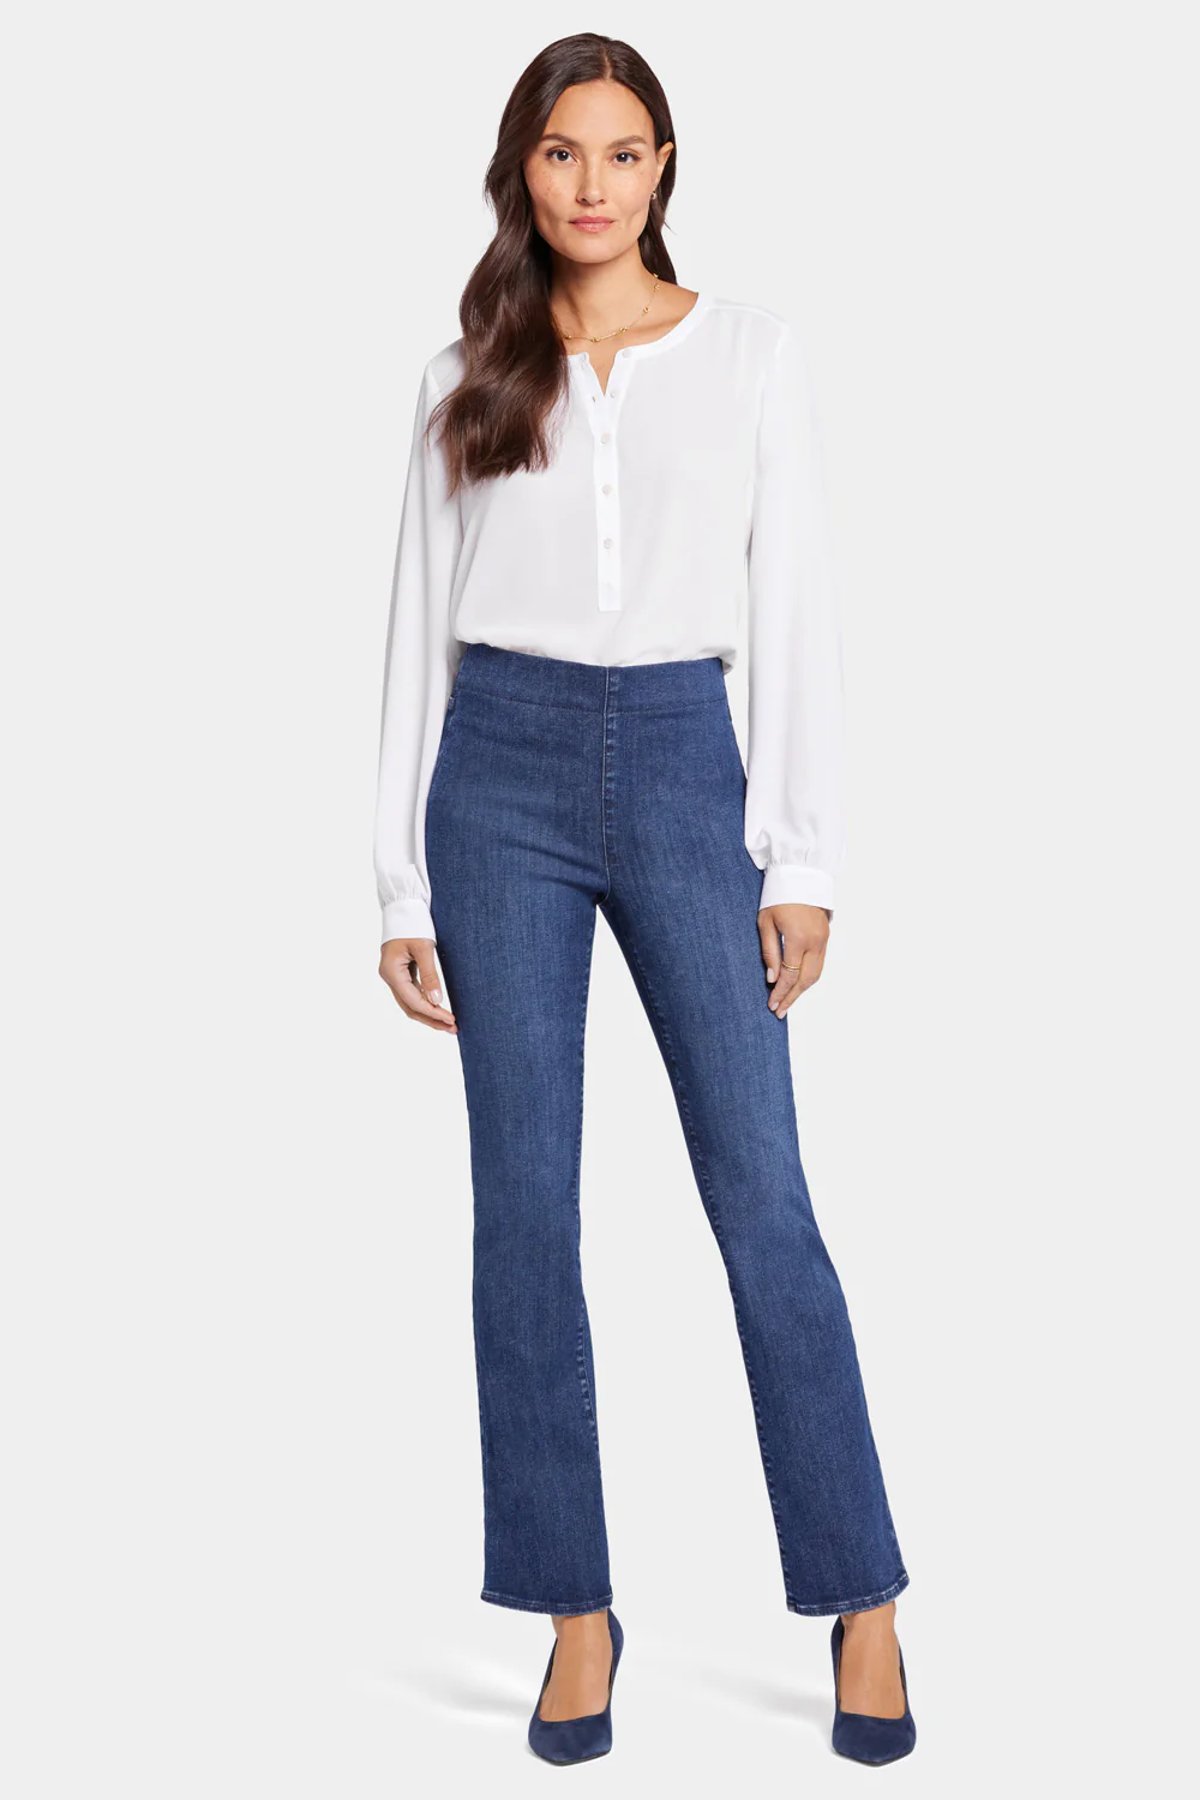 Sofia Jeans Women's Marisol Bootcut Mid Rise Jeans